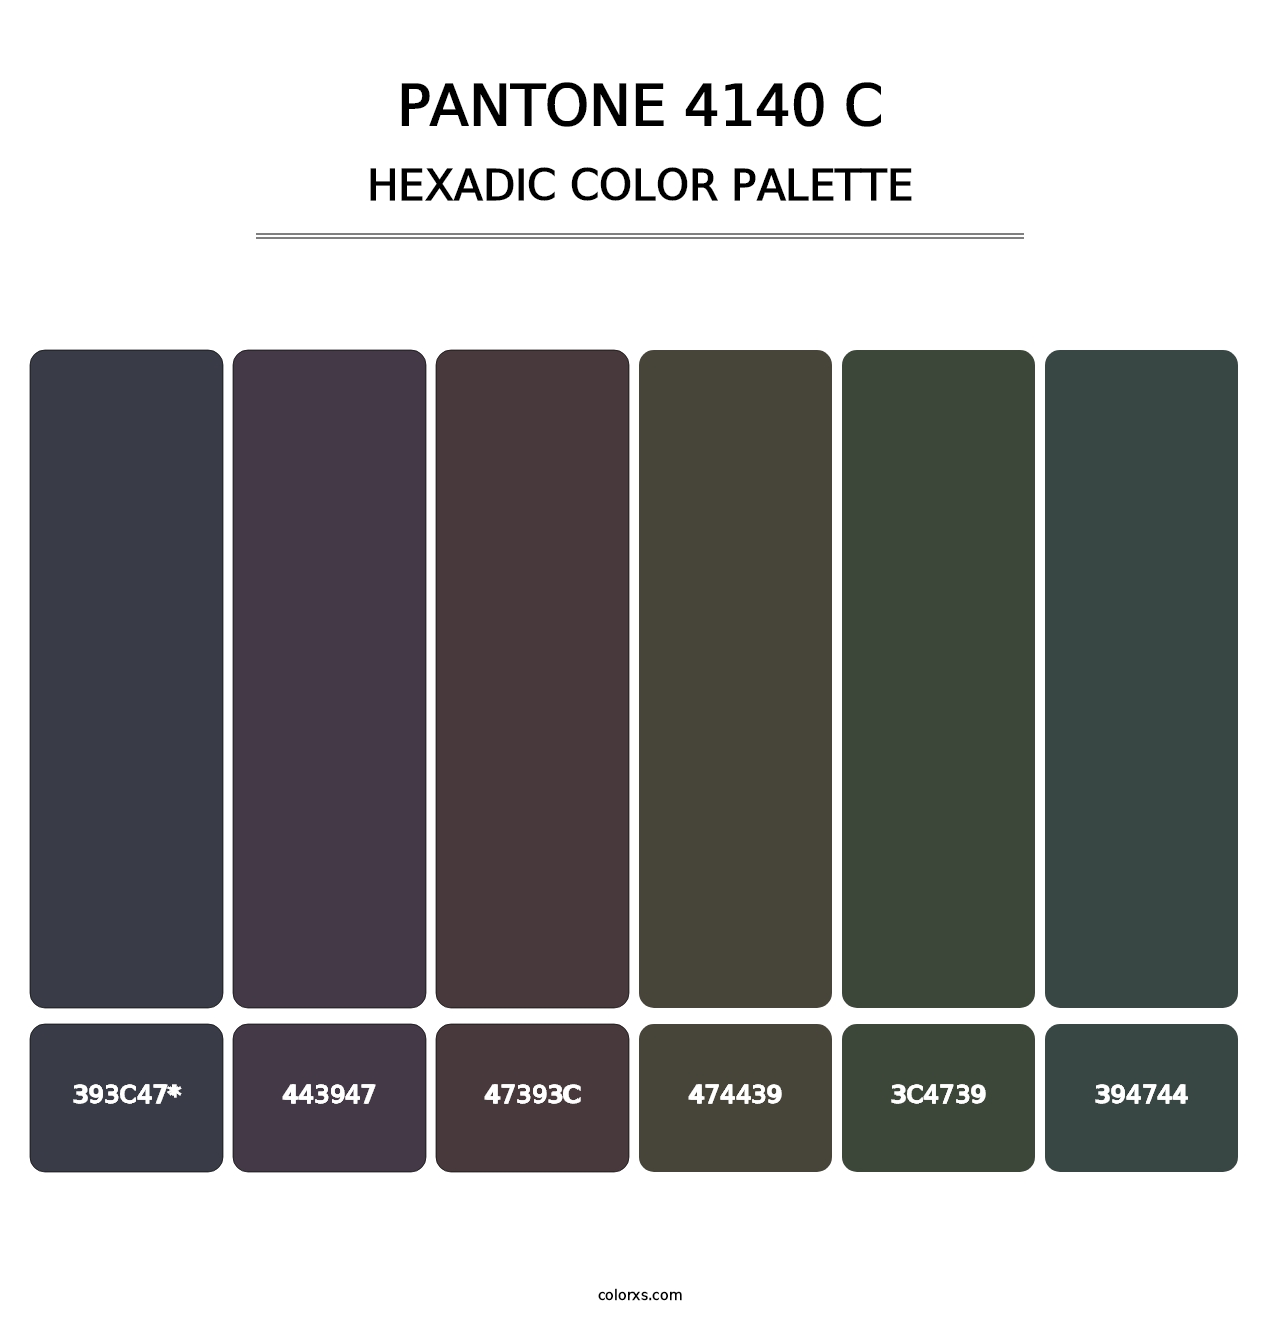 PANTONE 4140 C - Hexadic Color Palette